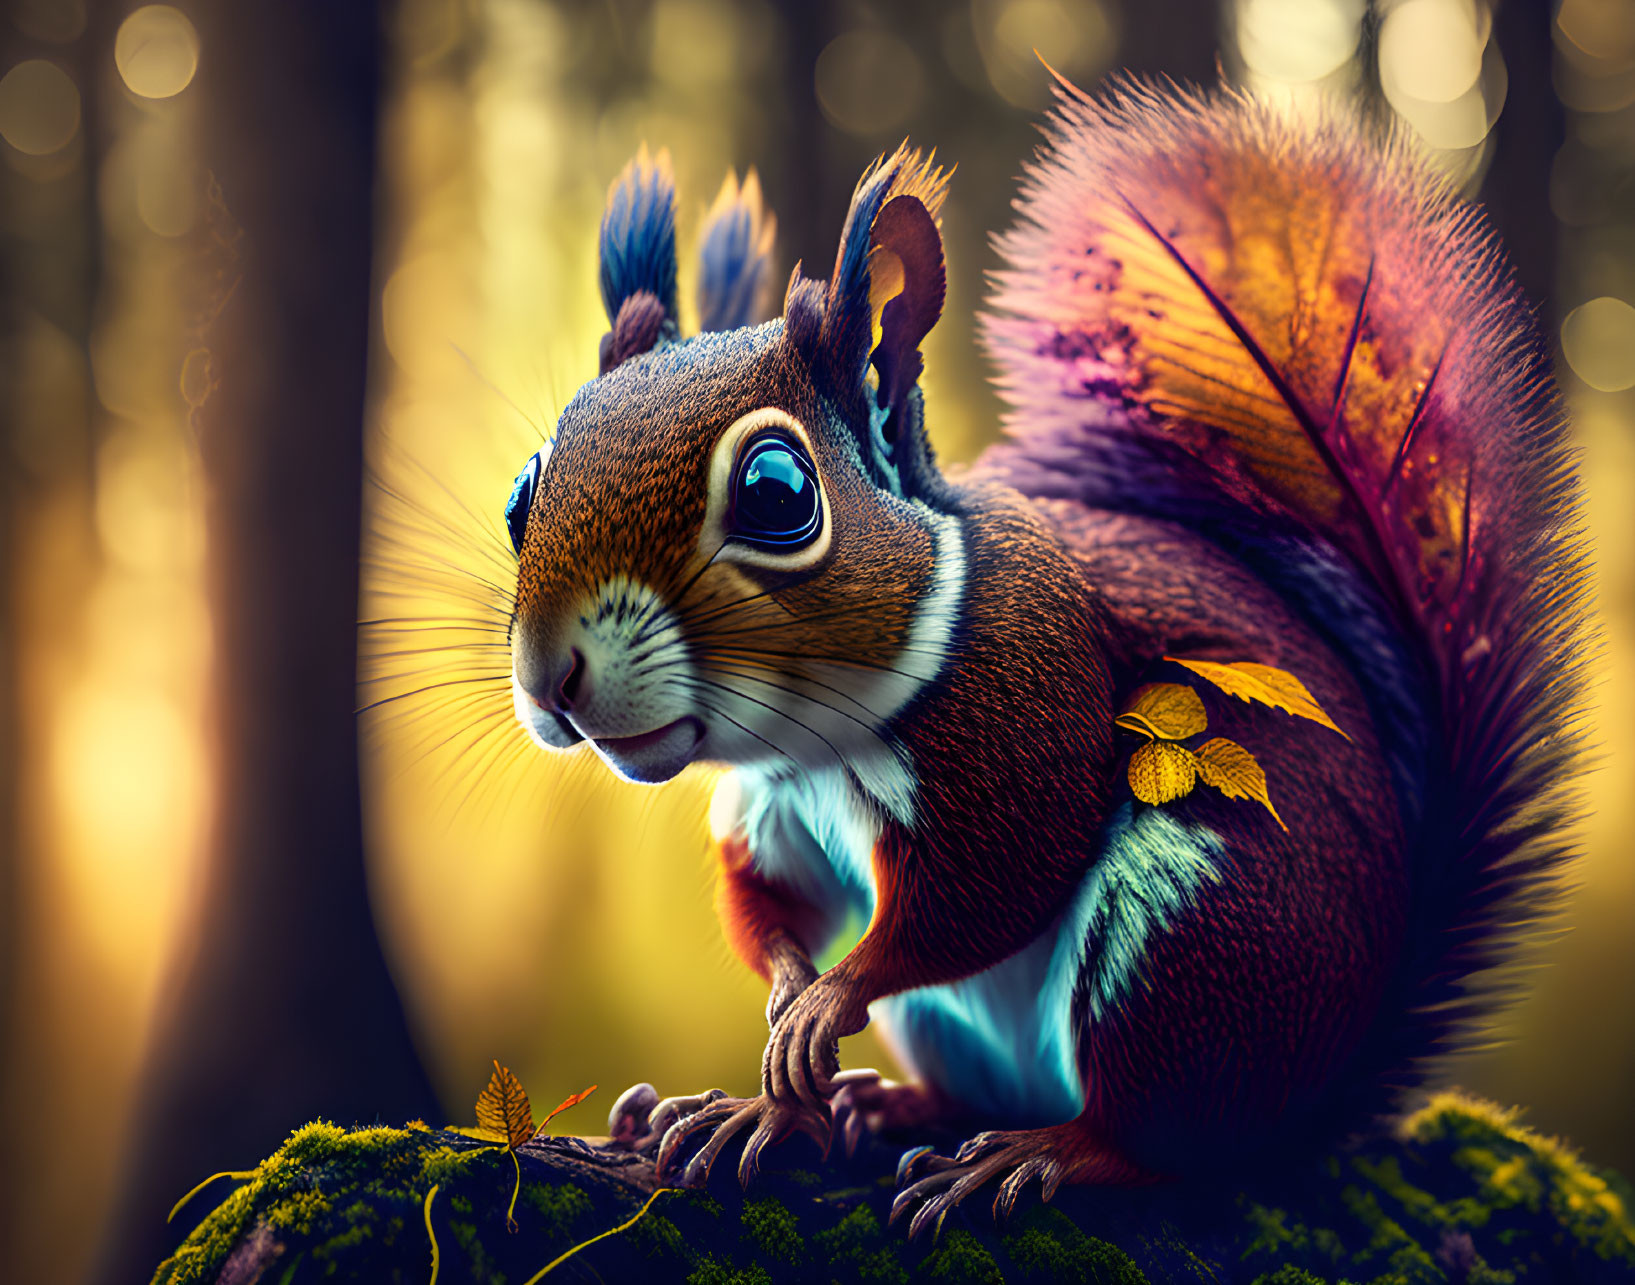 Digital Art: Squirrel on Mossy Log in Forest Scene